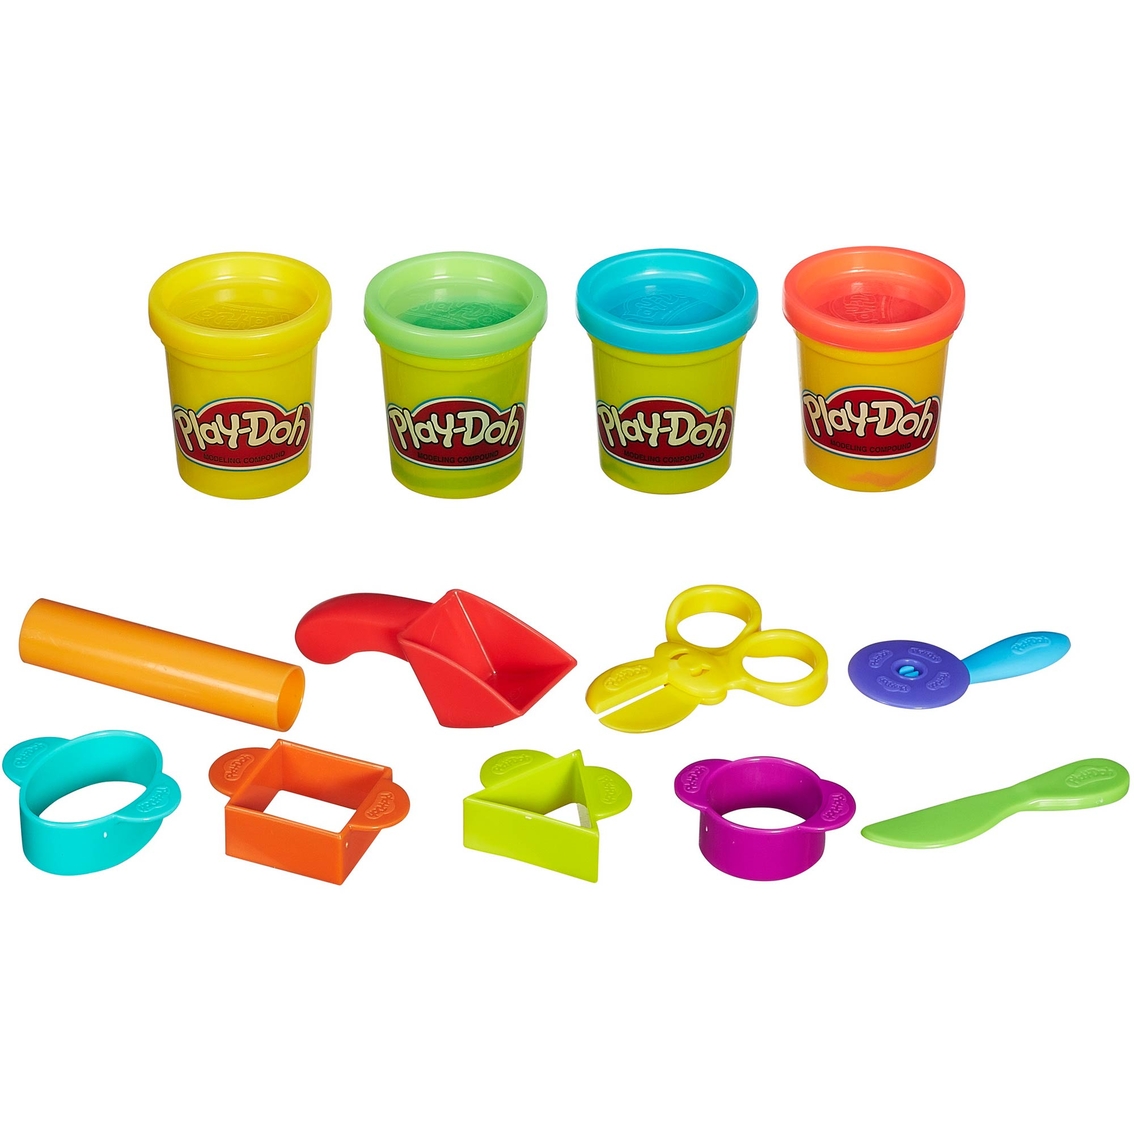 Play-Doh Starter Set - Image 2 of 2